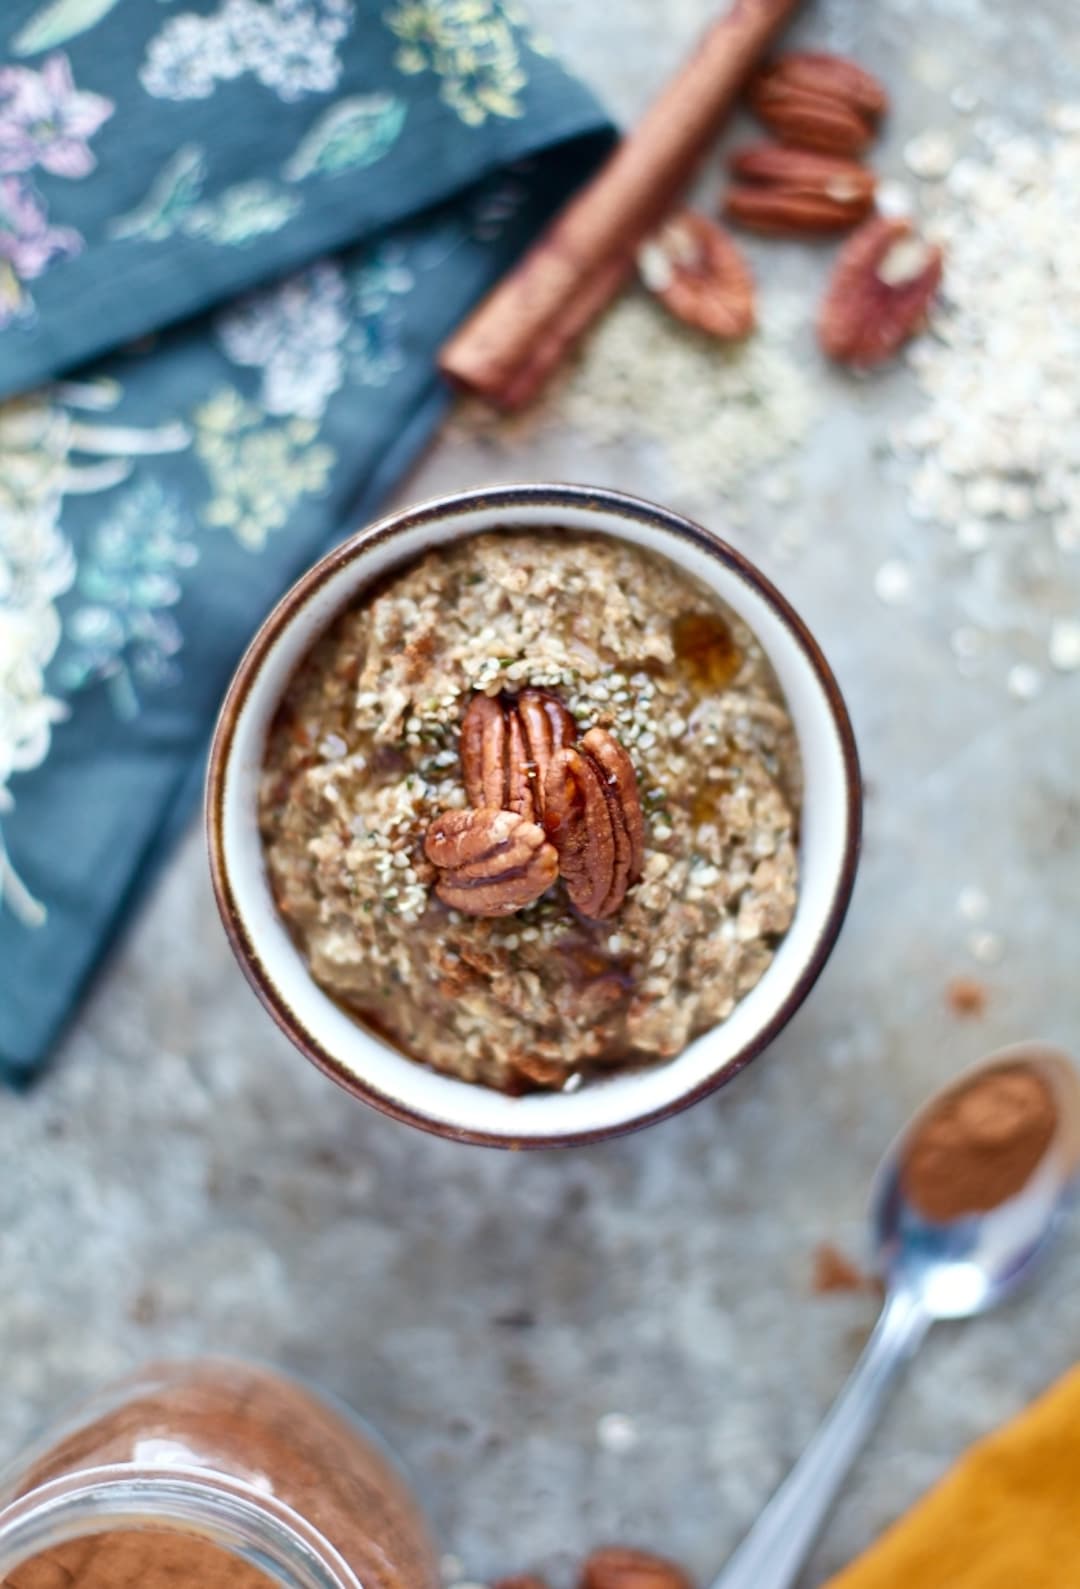 10 Terrific & Simple Healthy Fall Recipes - Maple Pecan Oatmeal